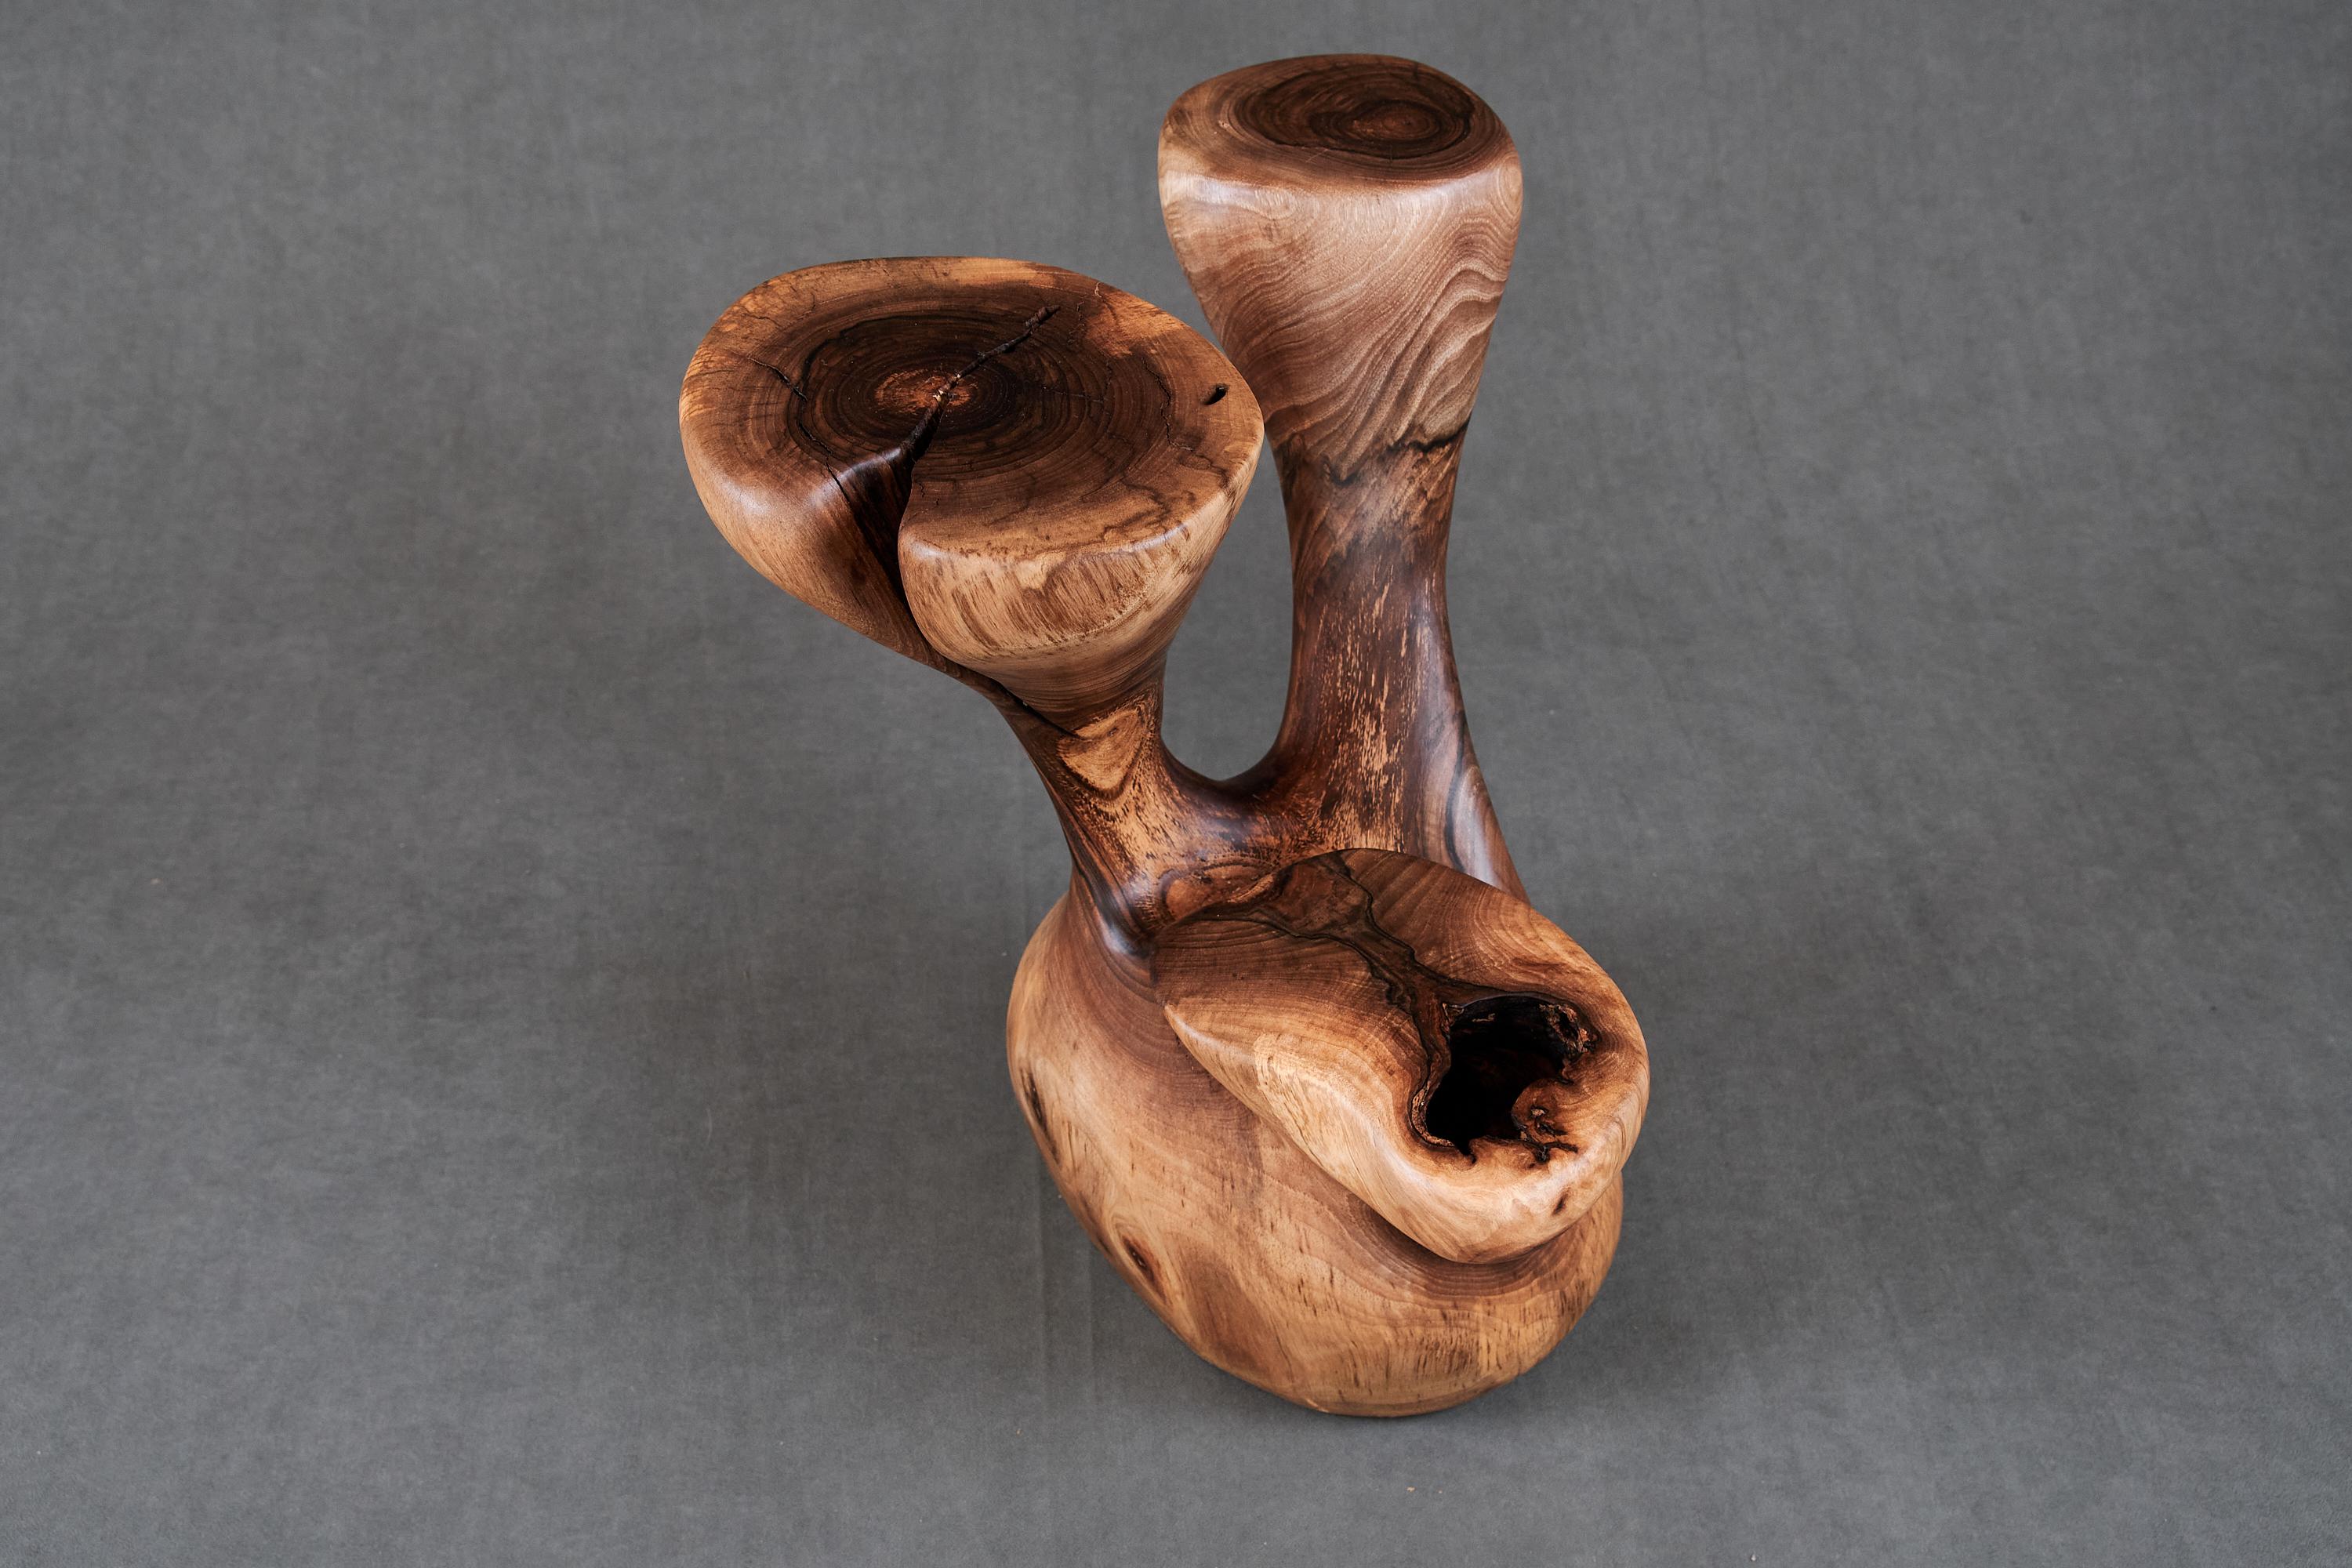 Solid Wood Sculptural Side Table, Original Contemporary Design, Logniture For Sale 3